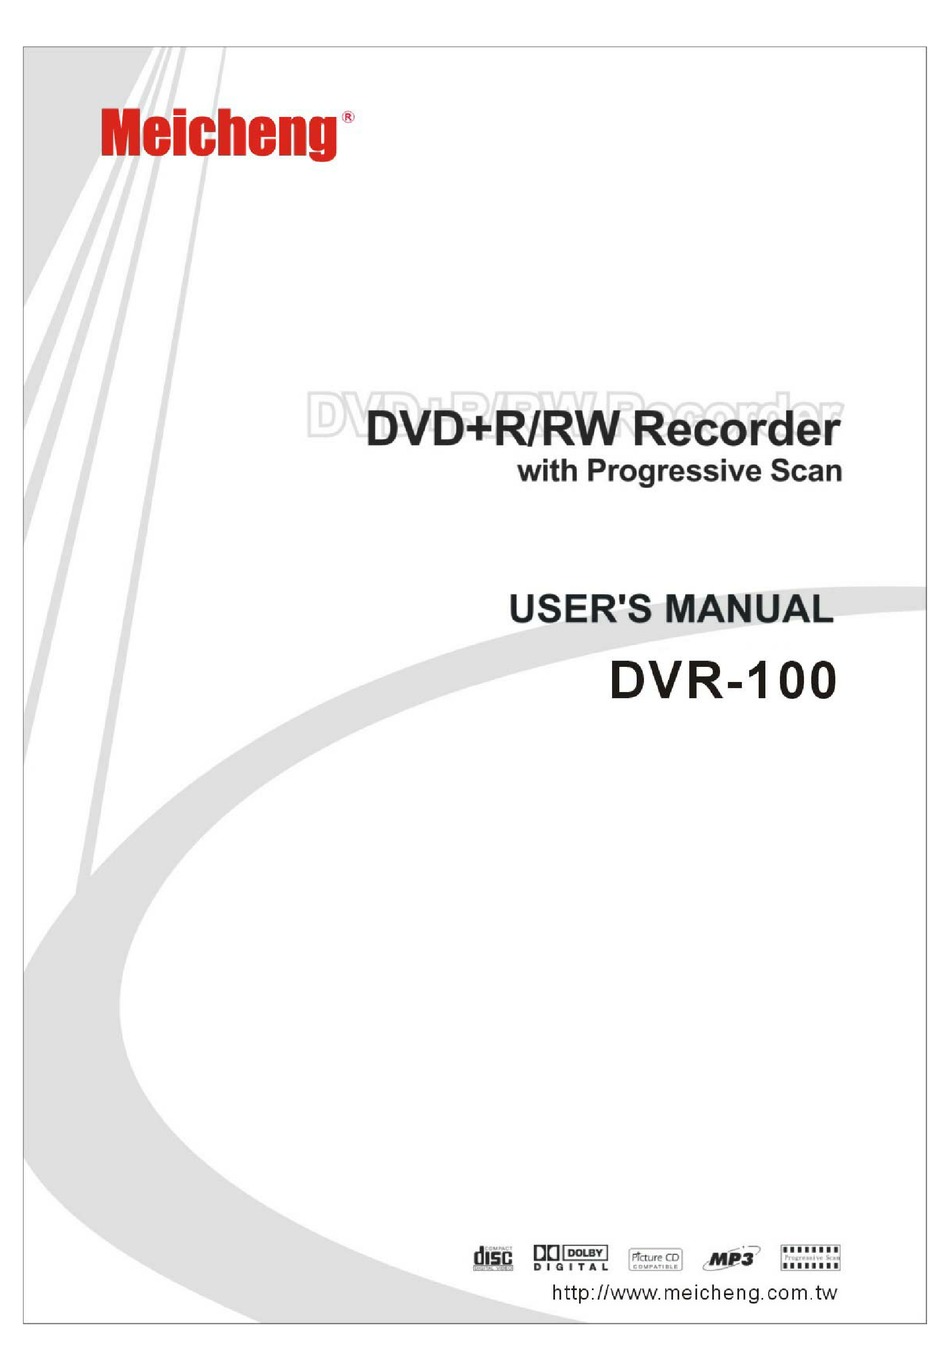 msa link software manual